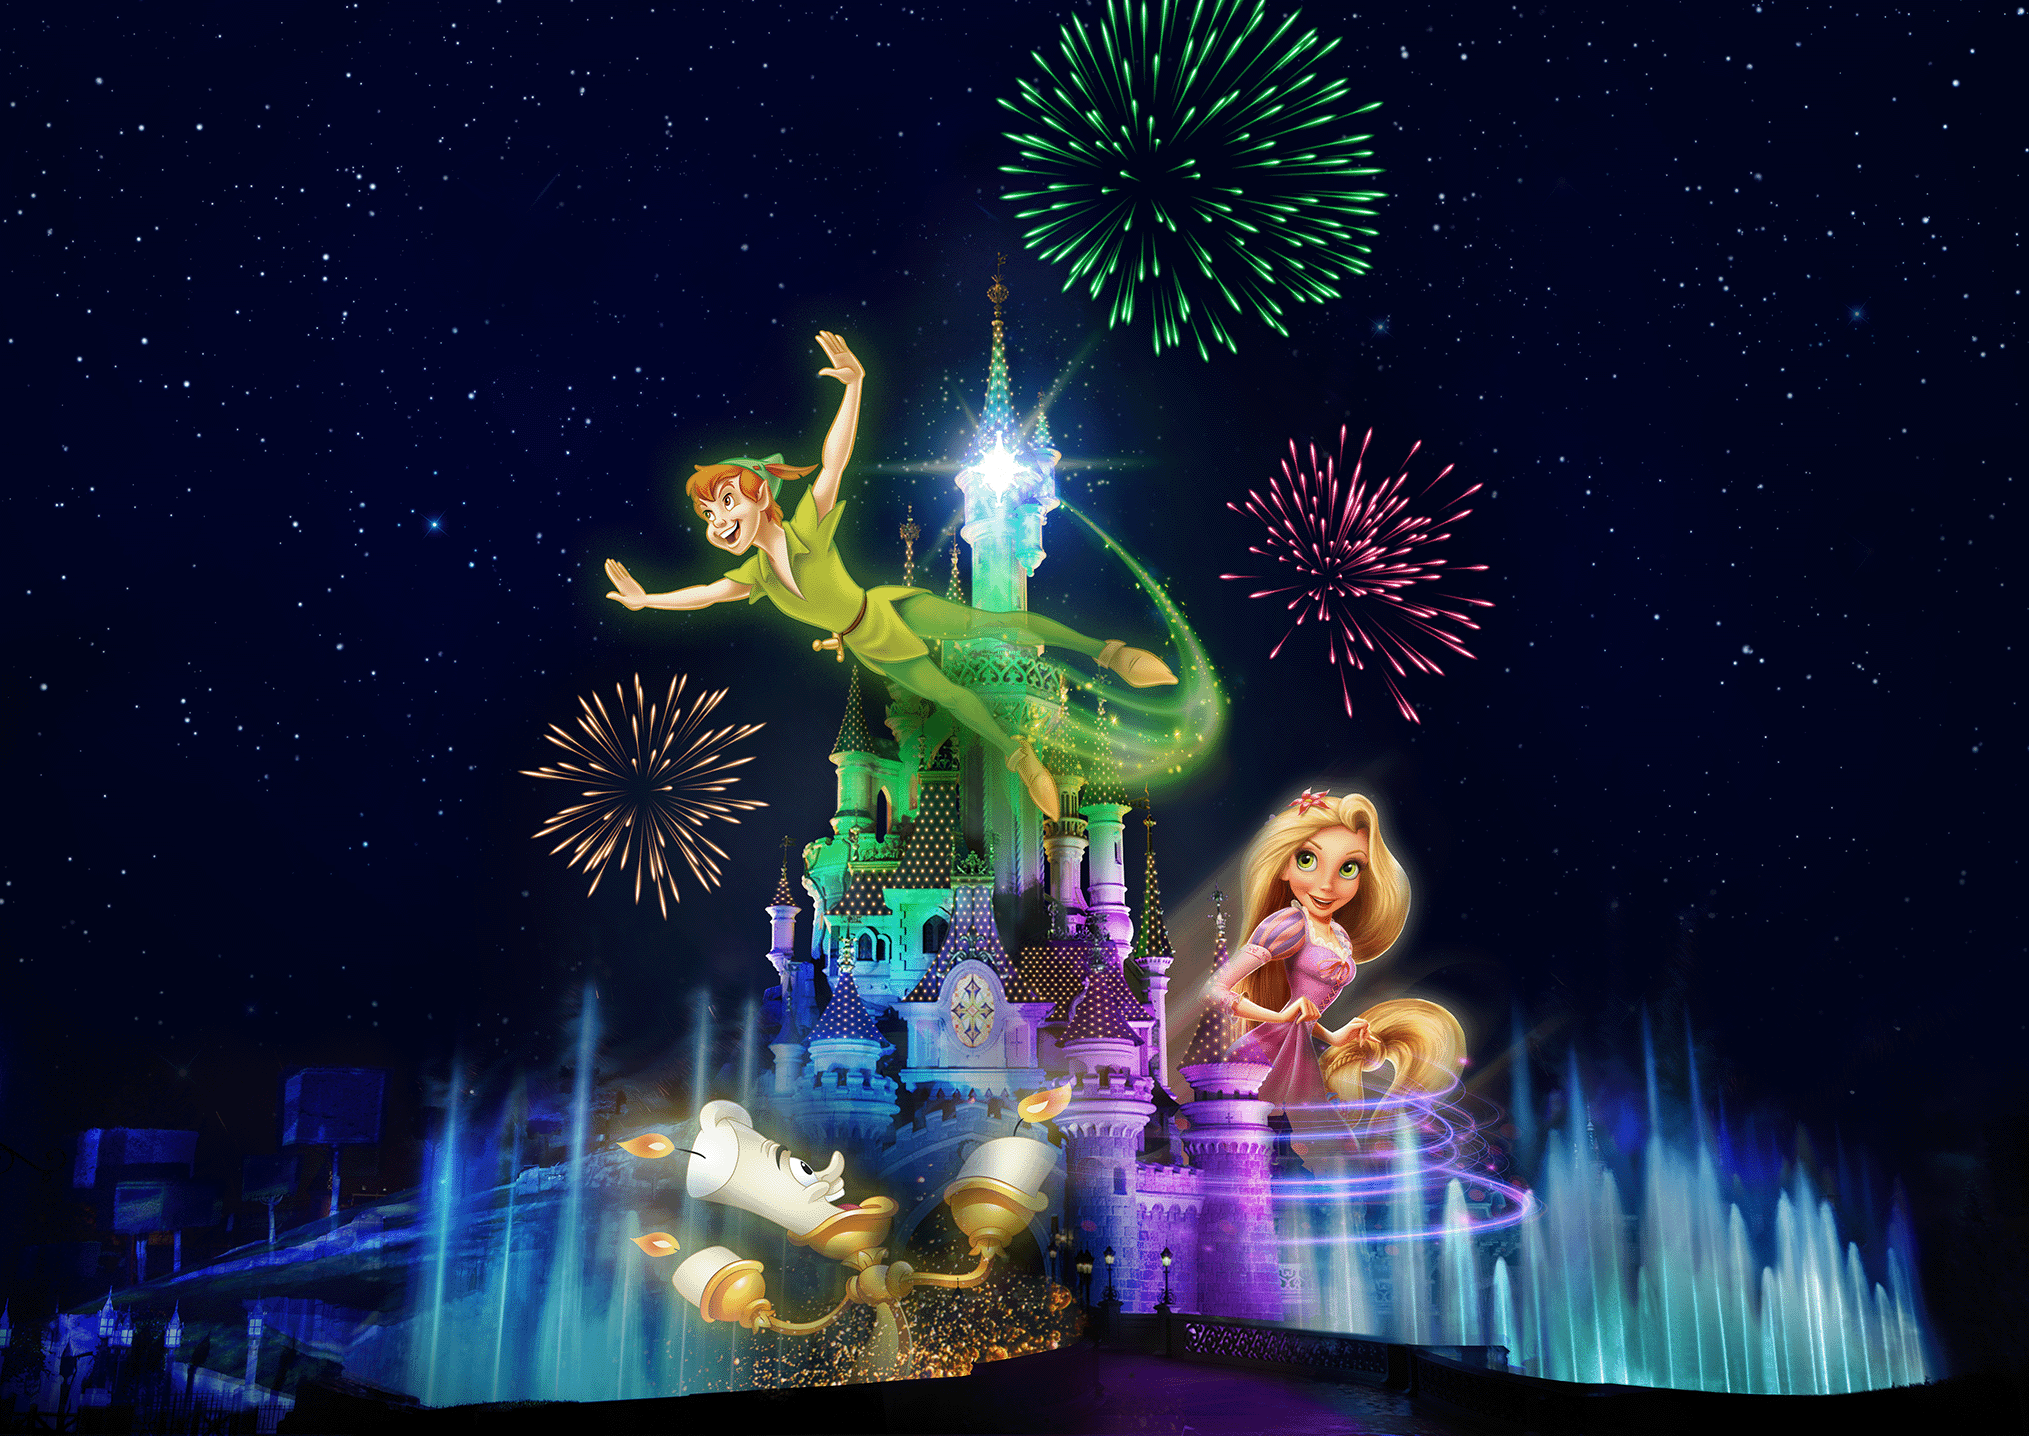 Disneyland Paris turns 30: has the theme park kept its magic?